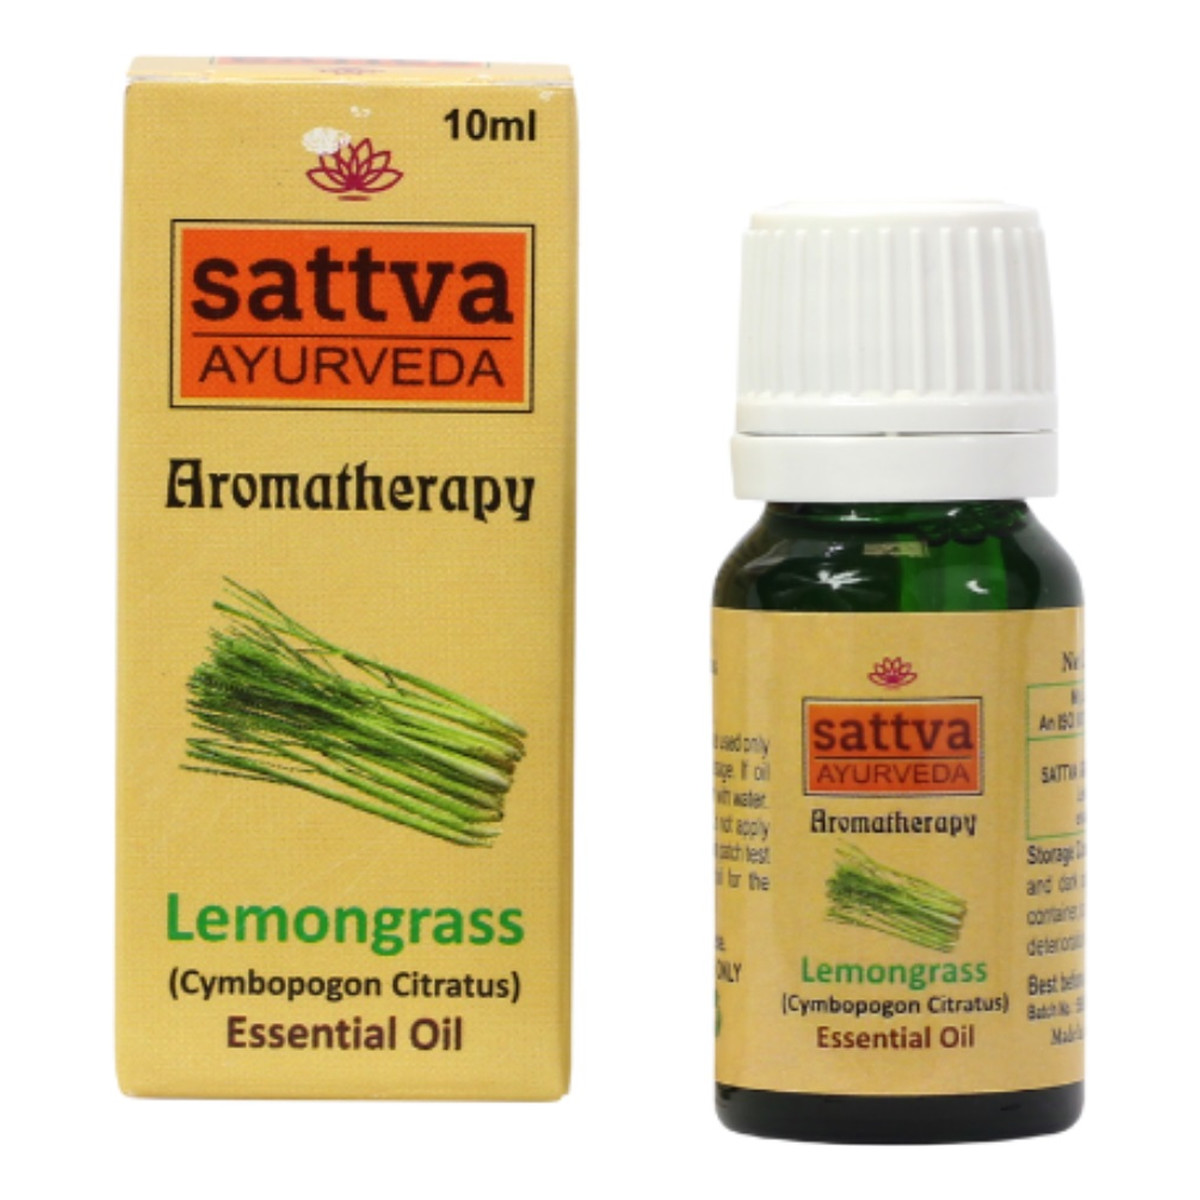 Sattva Aromatherapy Essential Oil Olejek eteryczny leomongrass 10ml